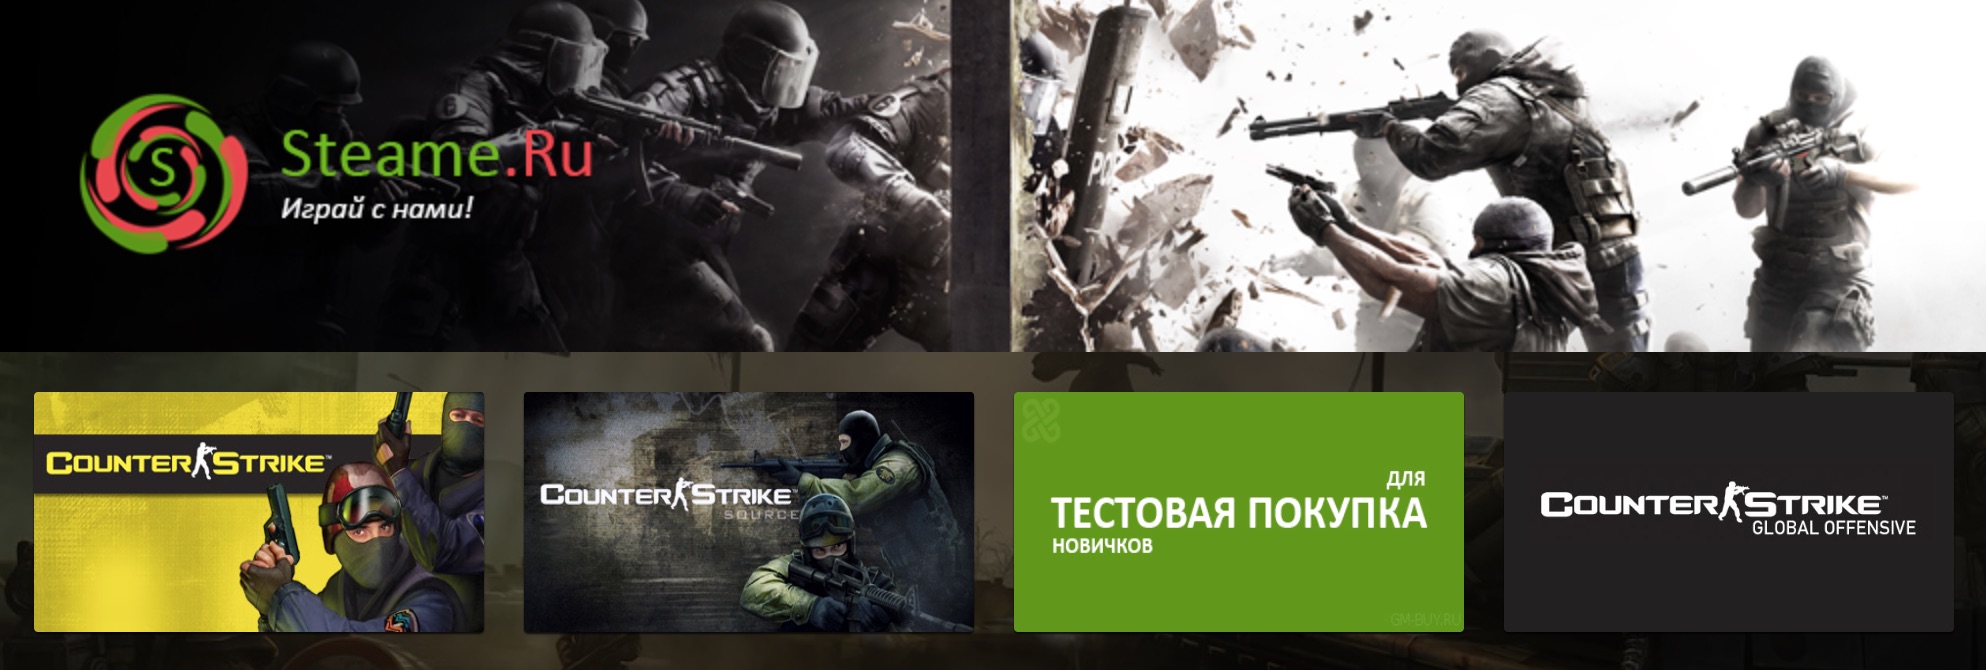 Готовые аккаунты от Steame.ru